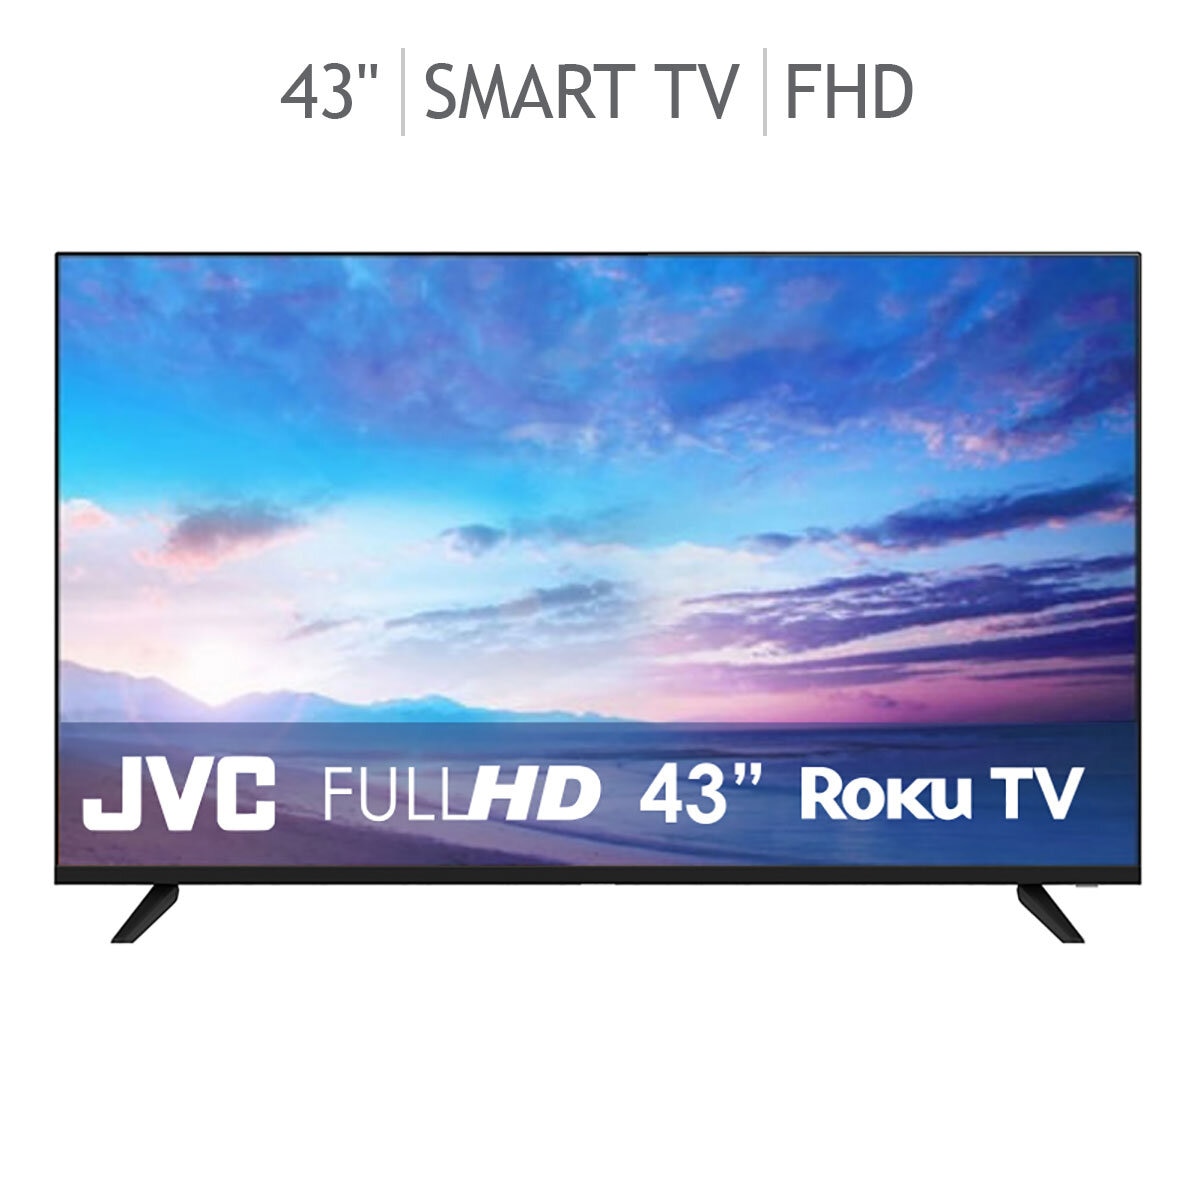 JVC Pantalla 43 FHD Smart TV